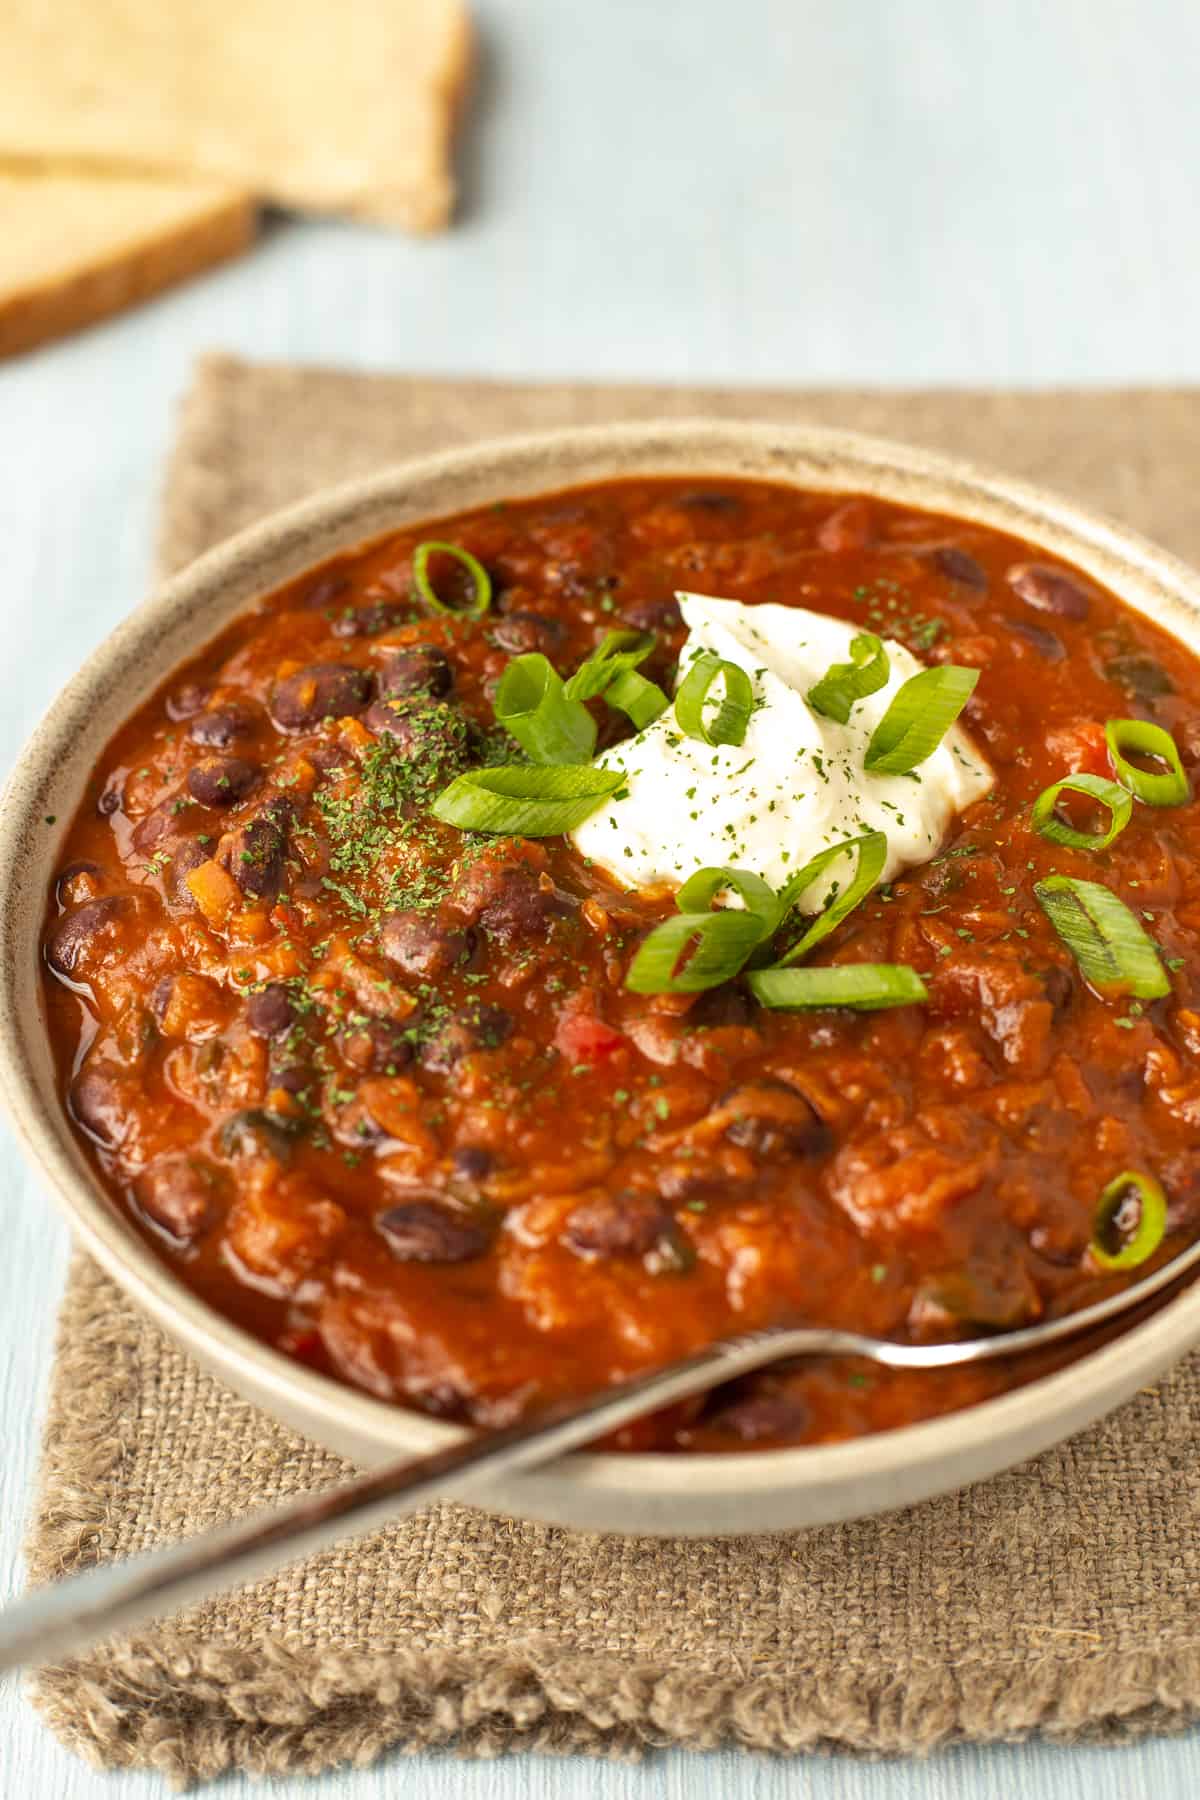 https://www.easycheesyvegetarian.com/wp-content/uploads/2013/10/Veggie-packed-slow-cooker-black-bean-soup-6.jpg